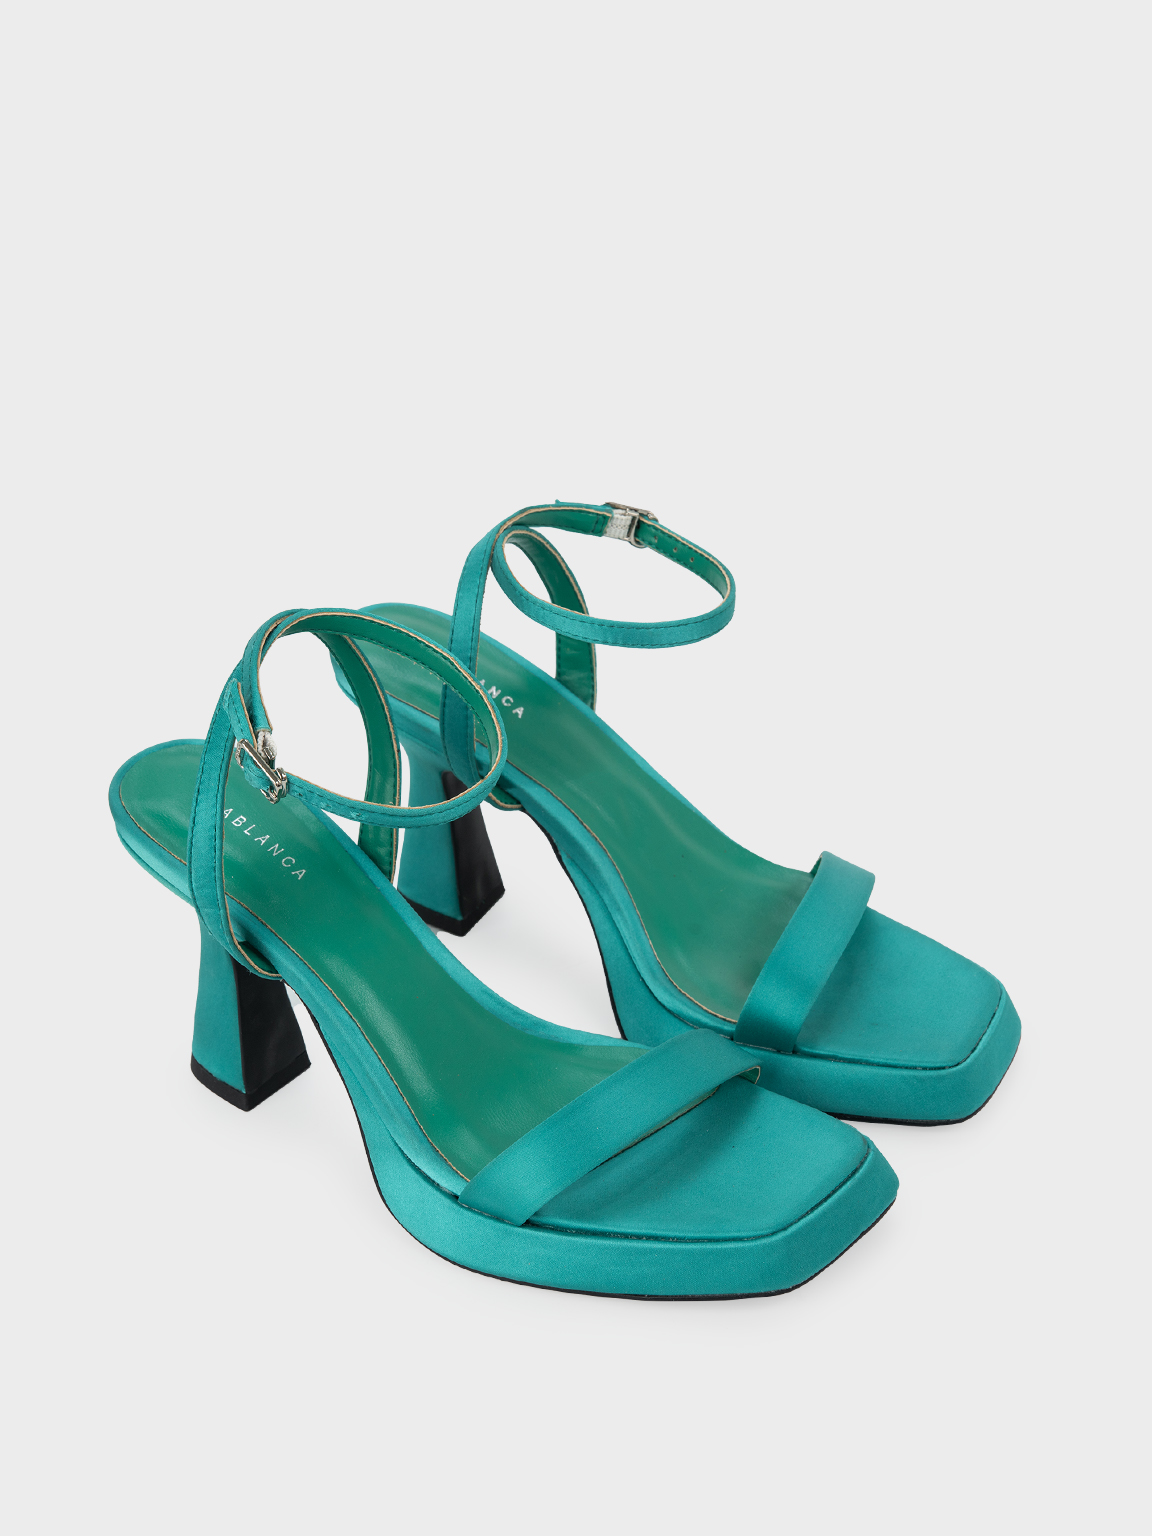 Giày Sandal nữ cao gót quai mảnh SABLANCA SN0168